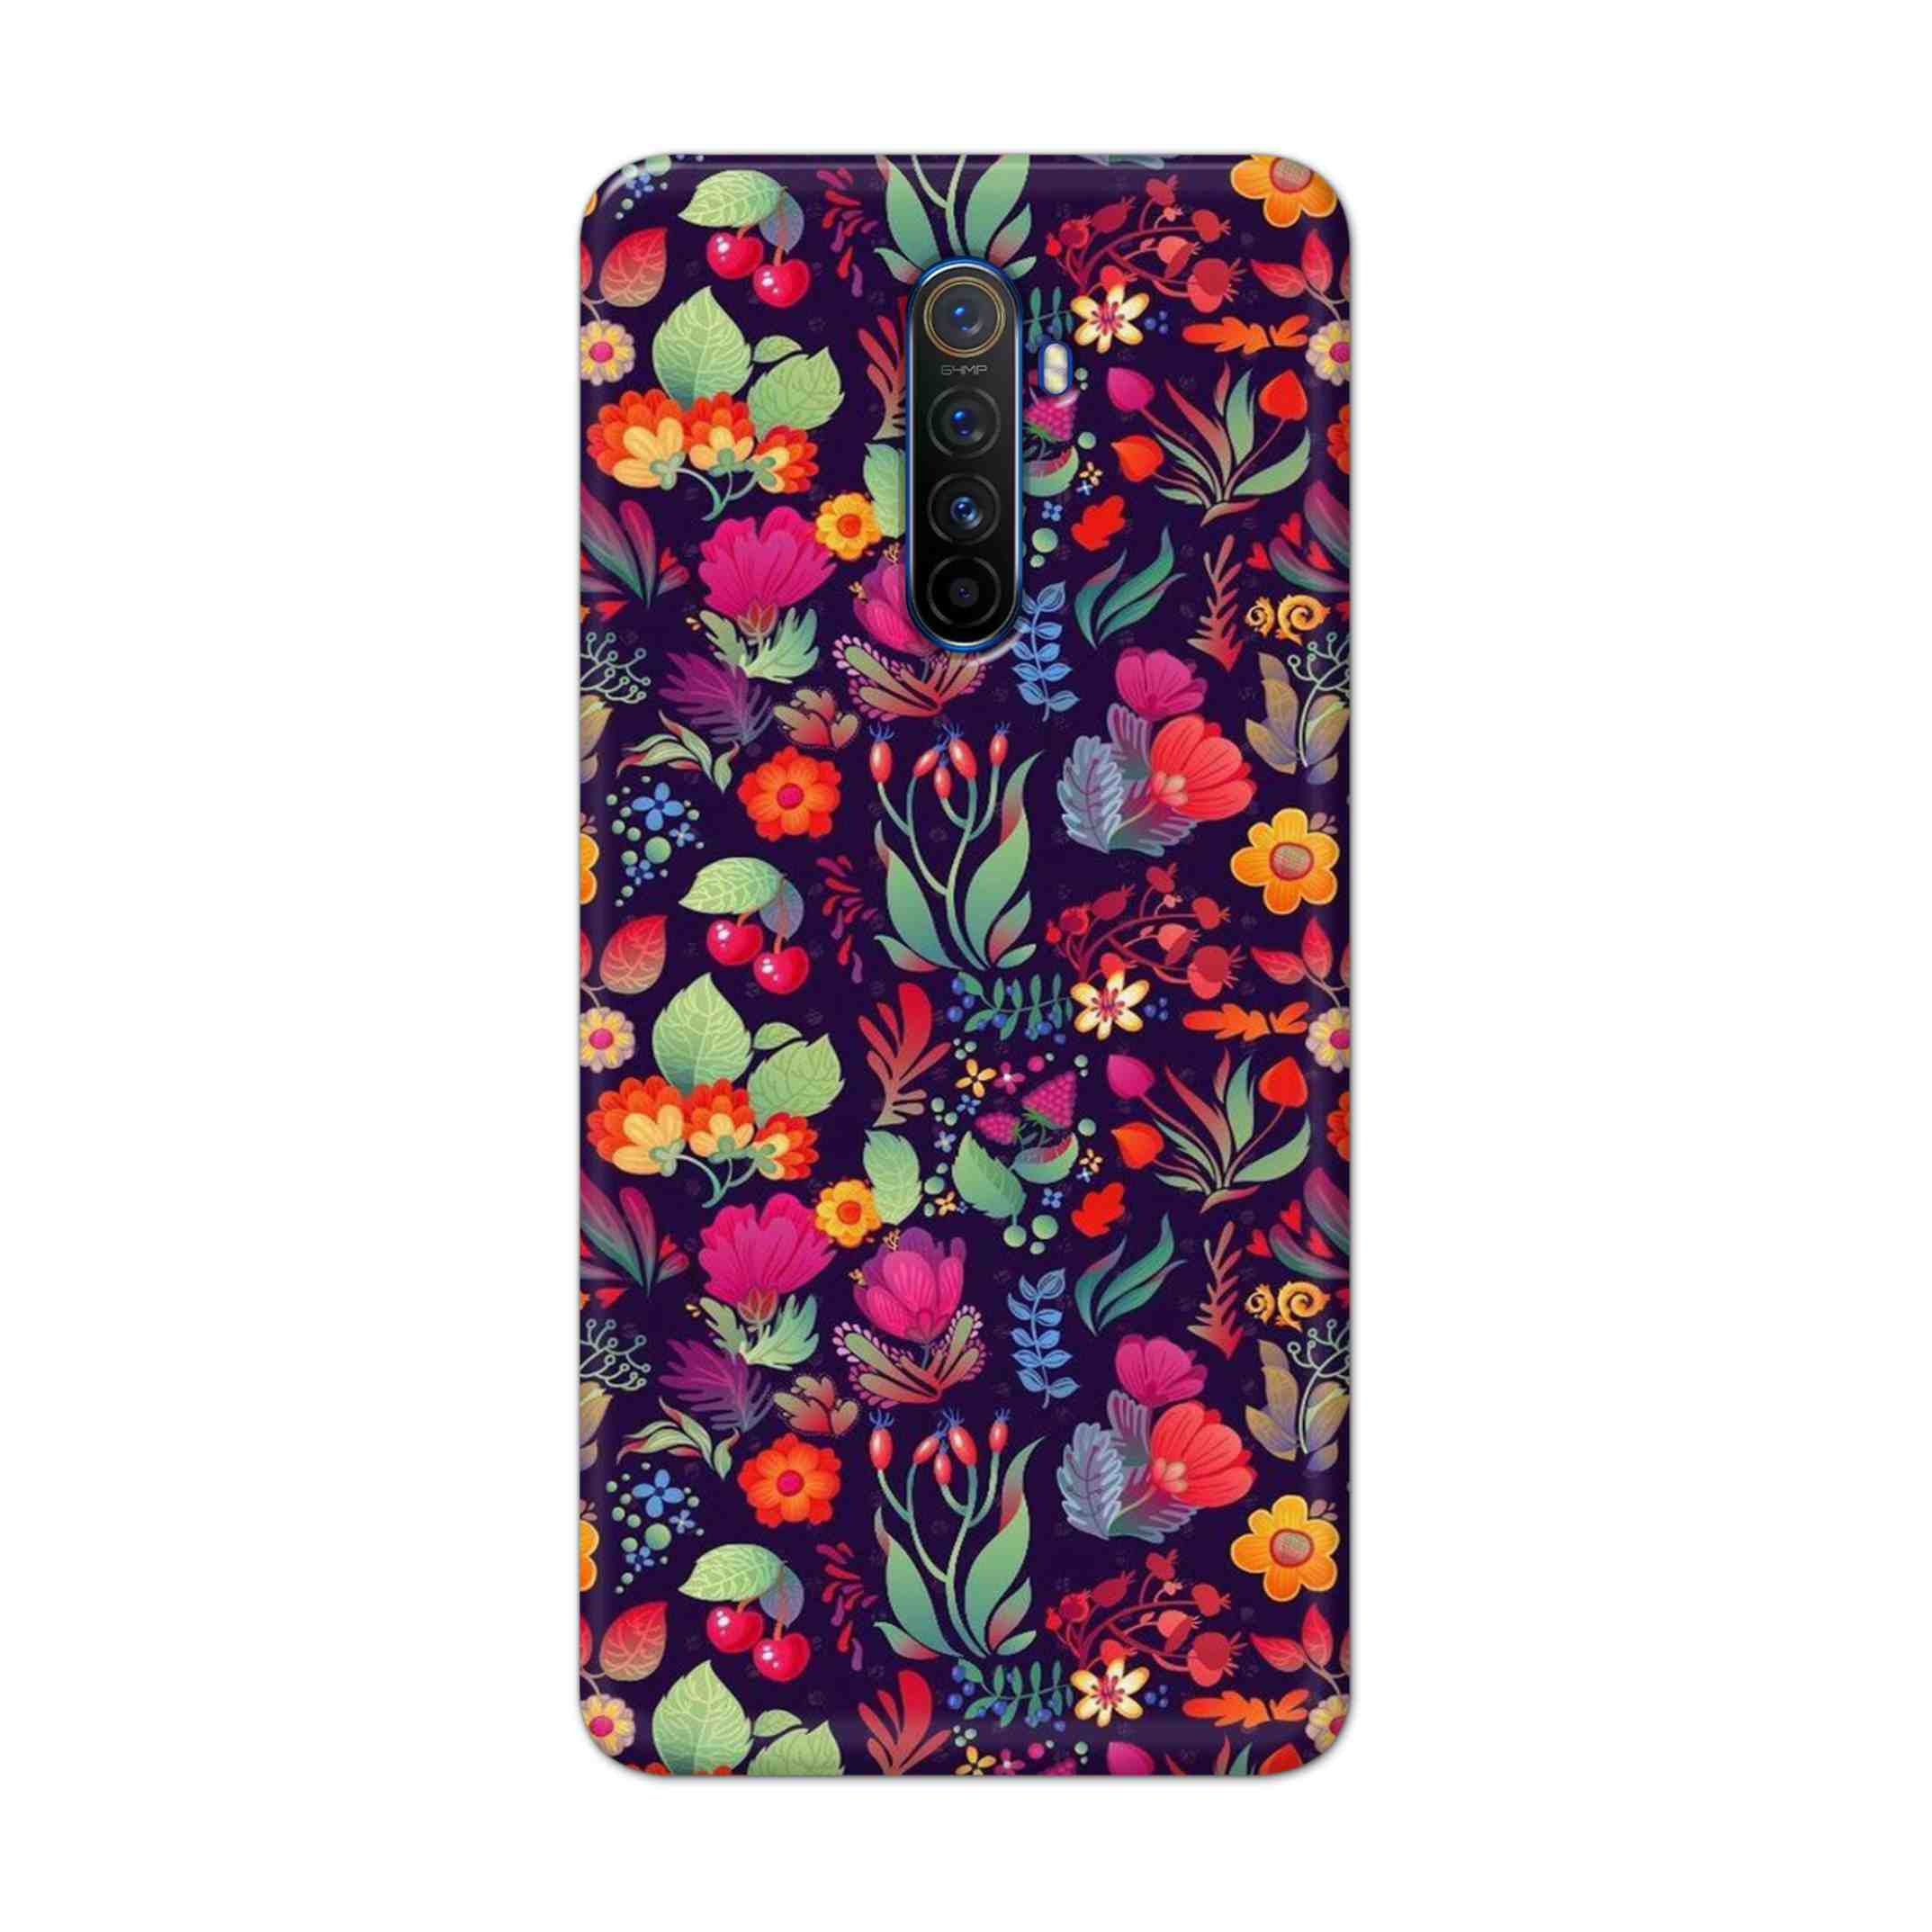 Buy Fruits Flower Hard Back Mobile Phone Case Cover For Realme X2 Pro Online